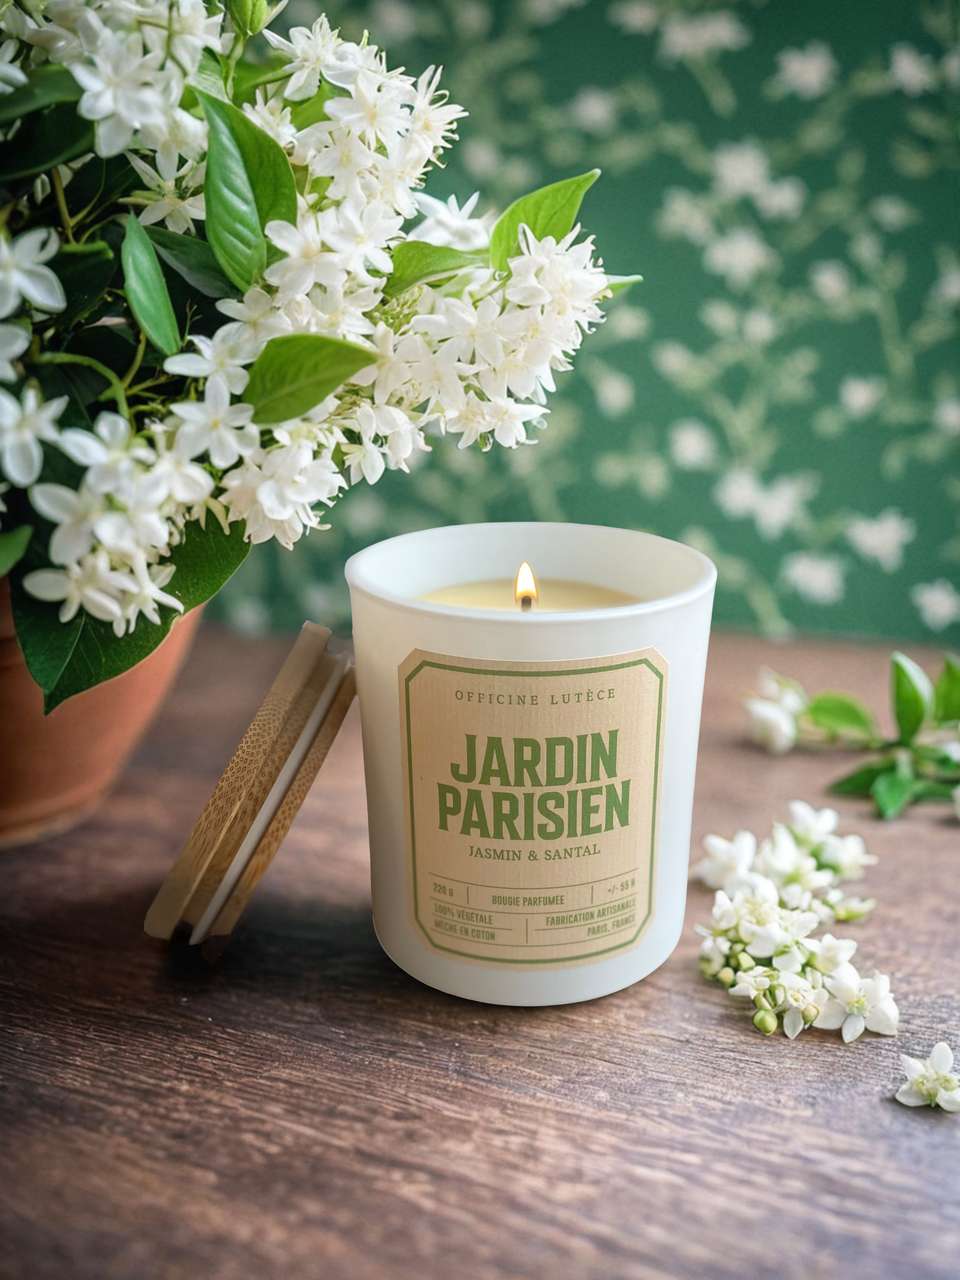 Parisian Garden Scented Candle - Jasmine & Sandalwood image